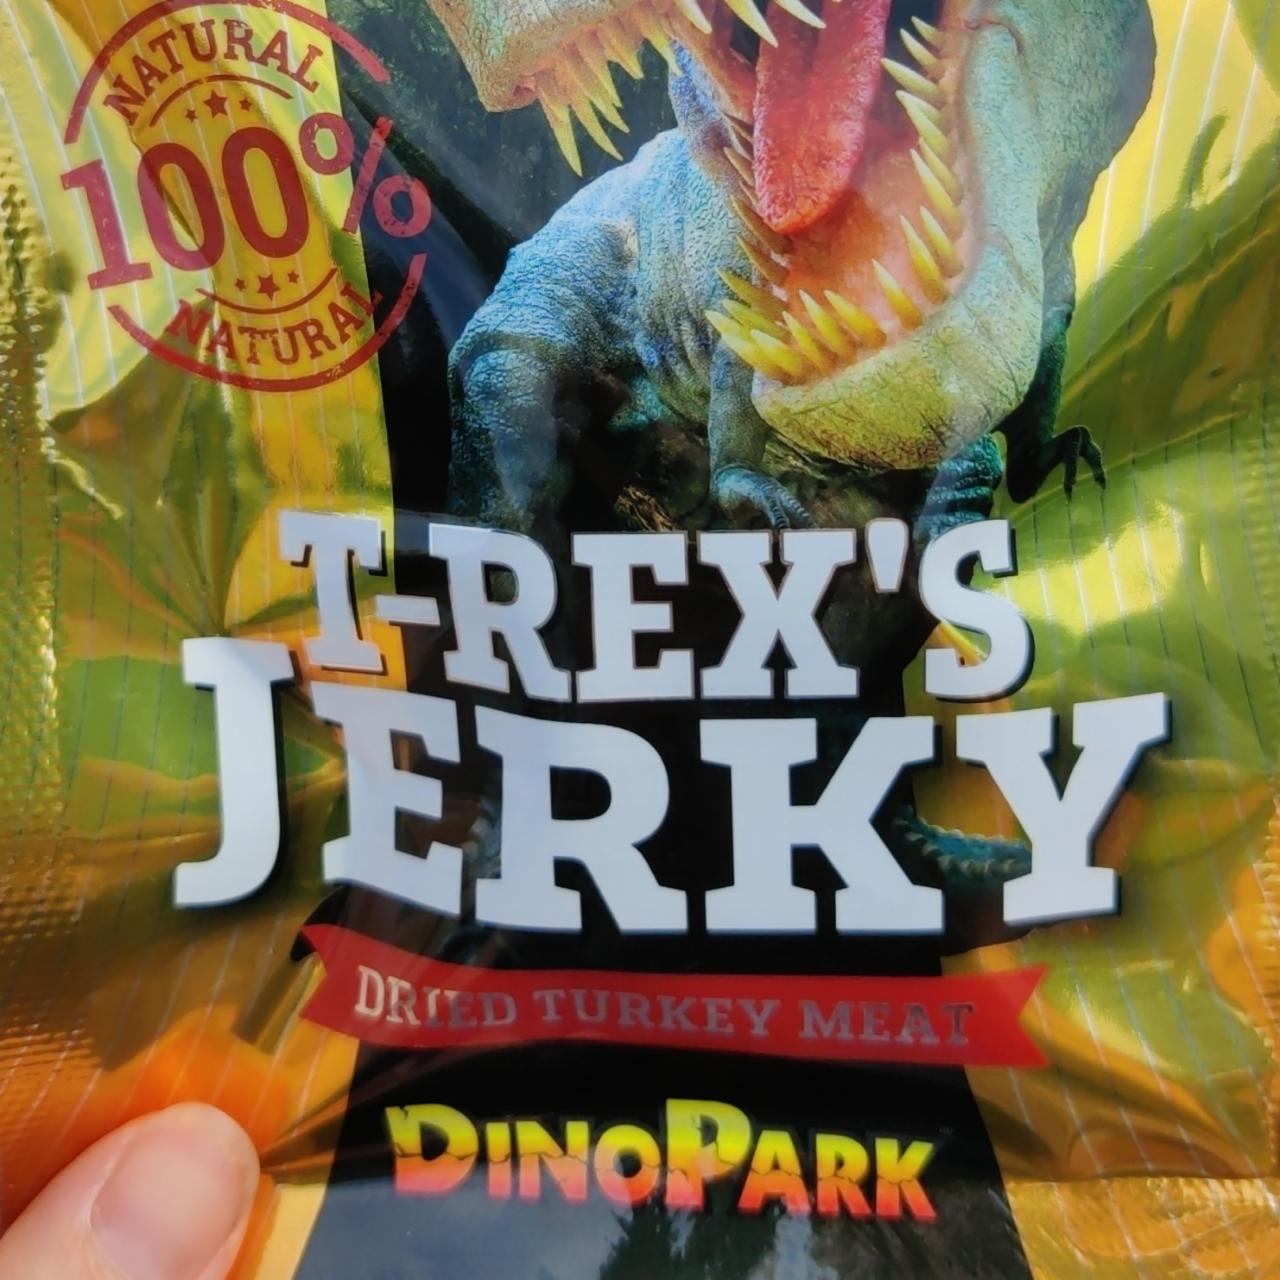 Fotografie - T-Rex's jerky DInoPark